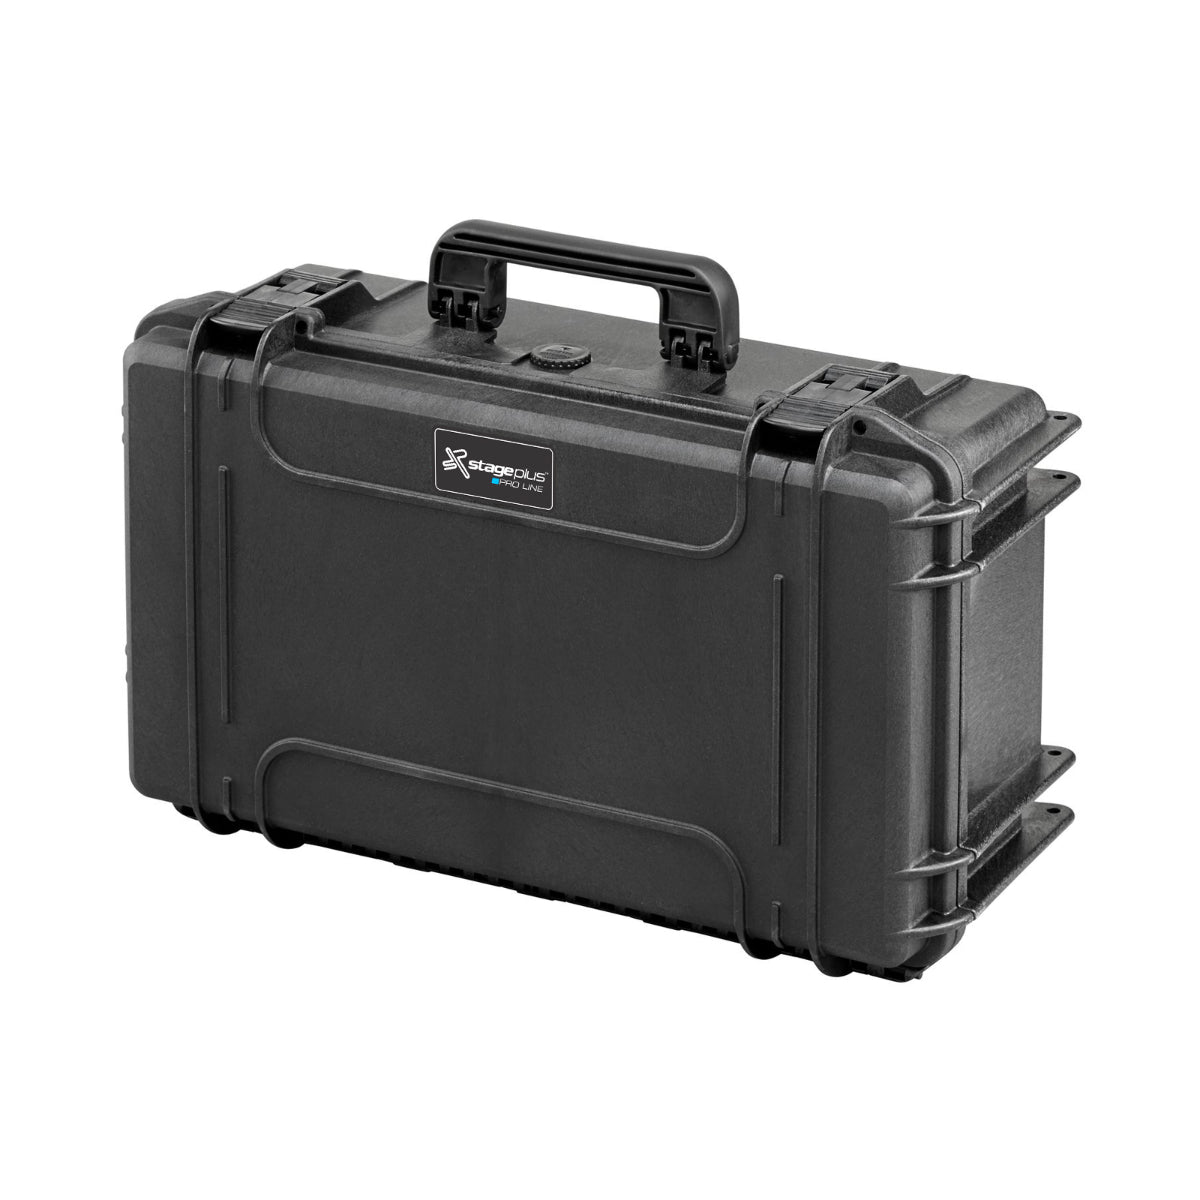 SP PRO 520S Black Carry Case, Cubed Foam, ID: L520xW290xH200mm